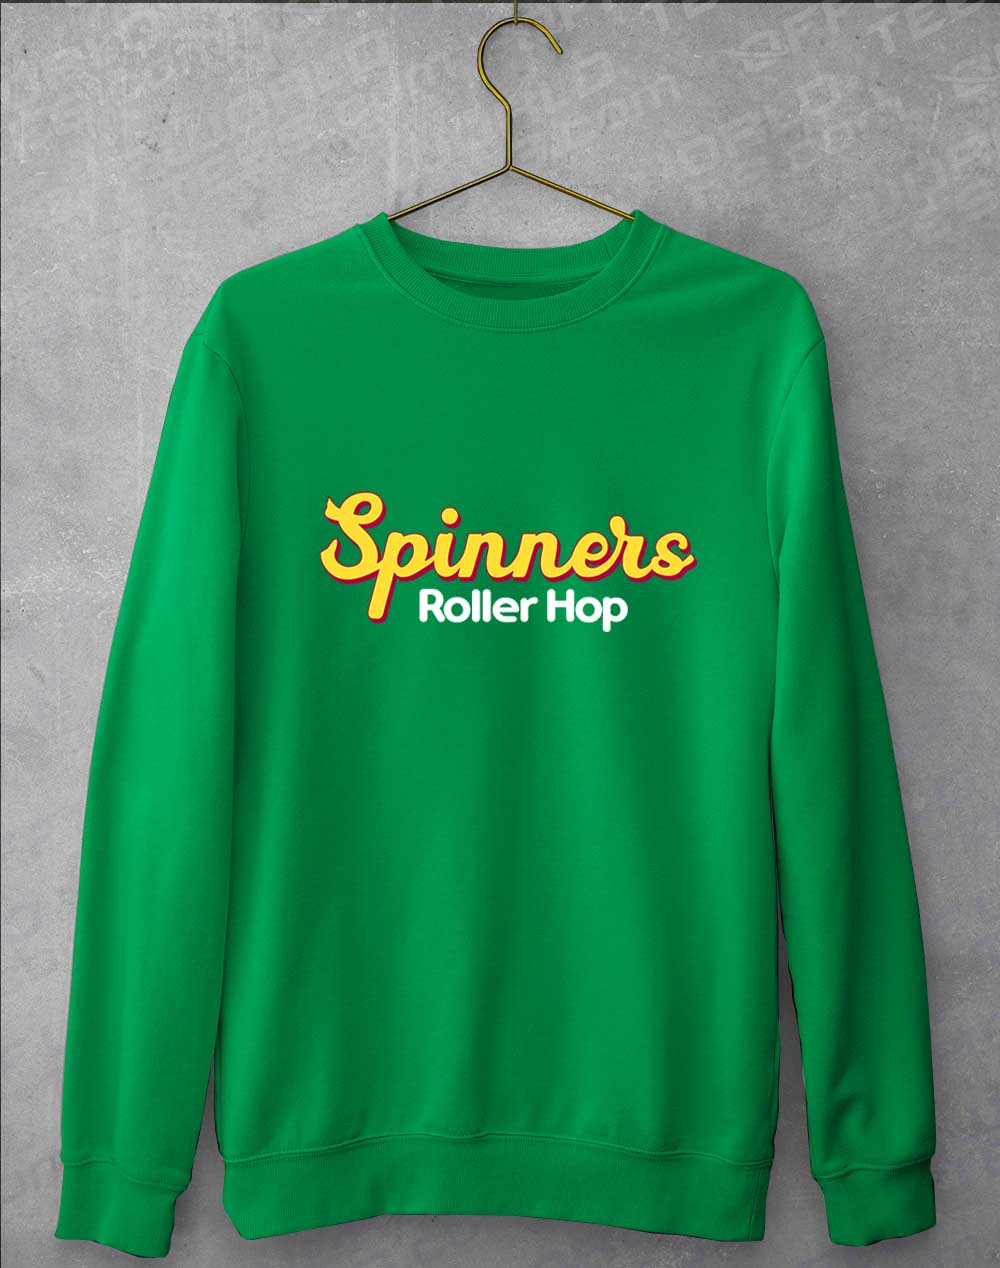 Kelly Green - Spinners Roller Hop Sweatshirt